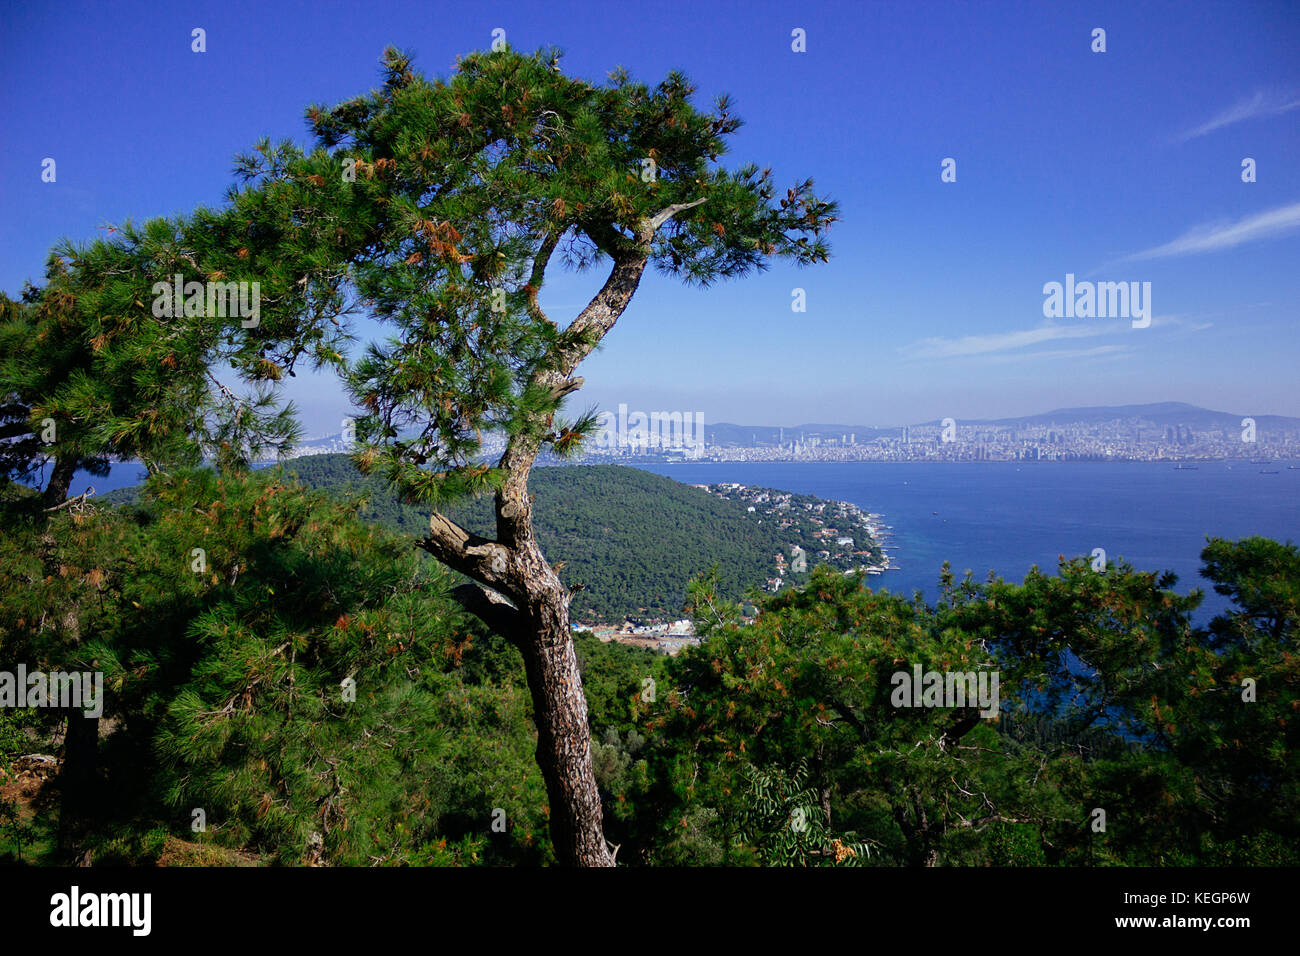 Pines on the island in Marmara sea selective focus Stock Photo